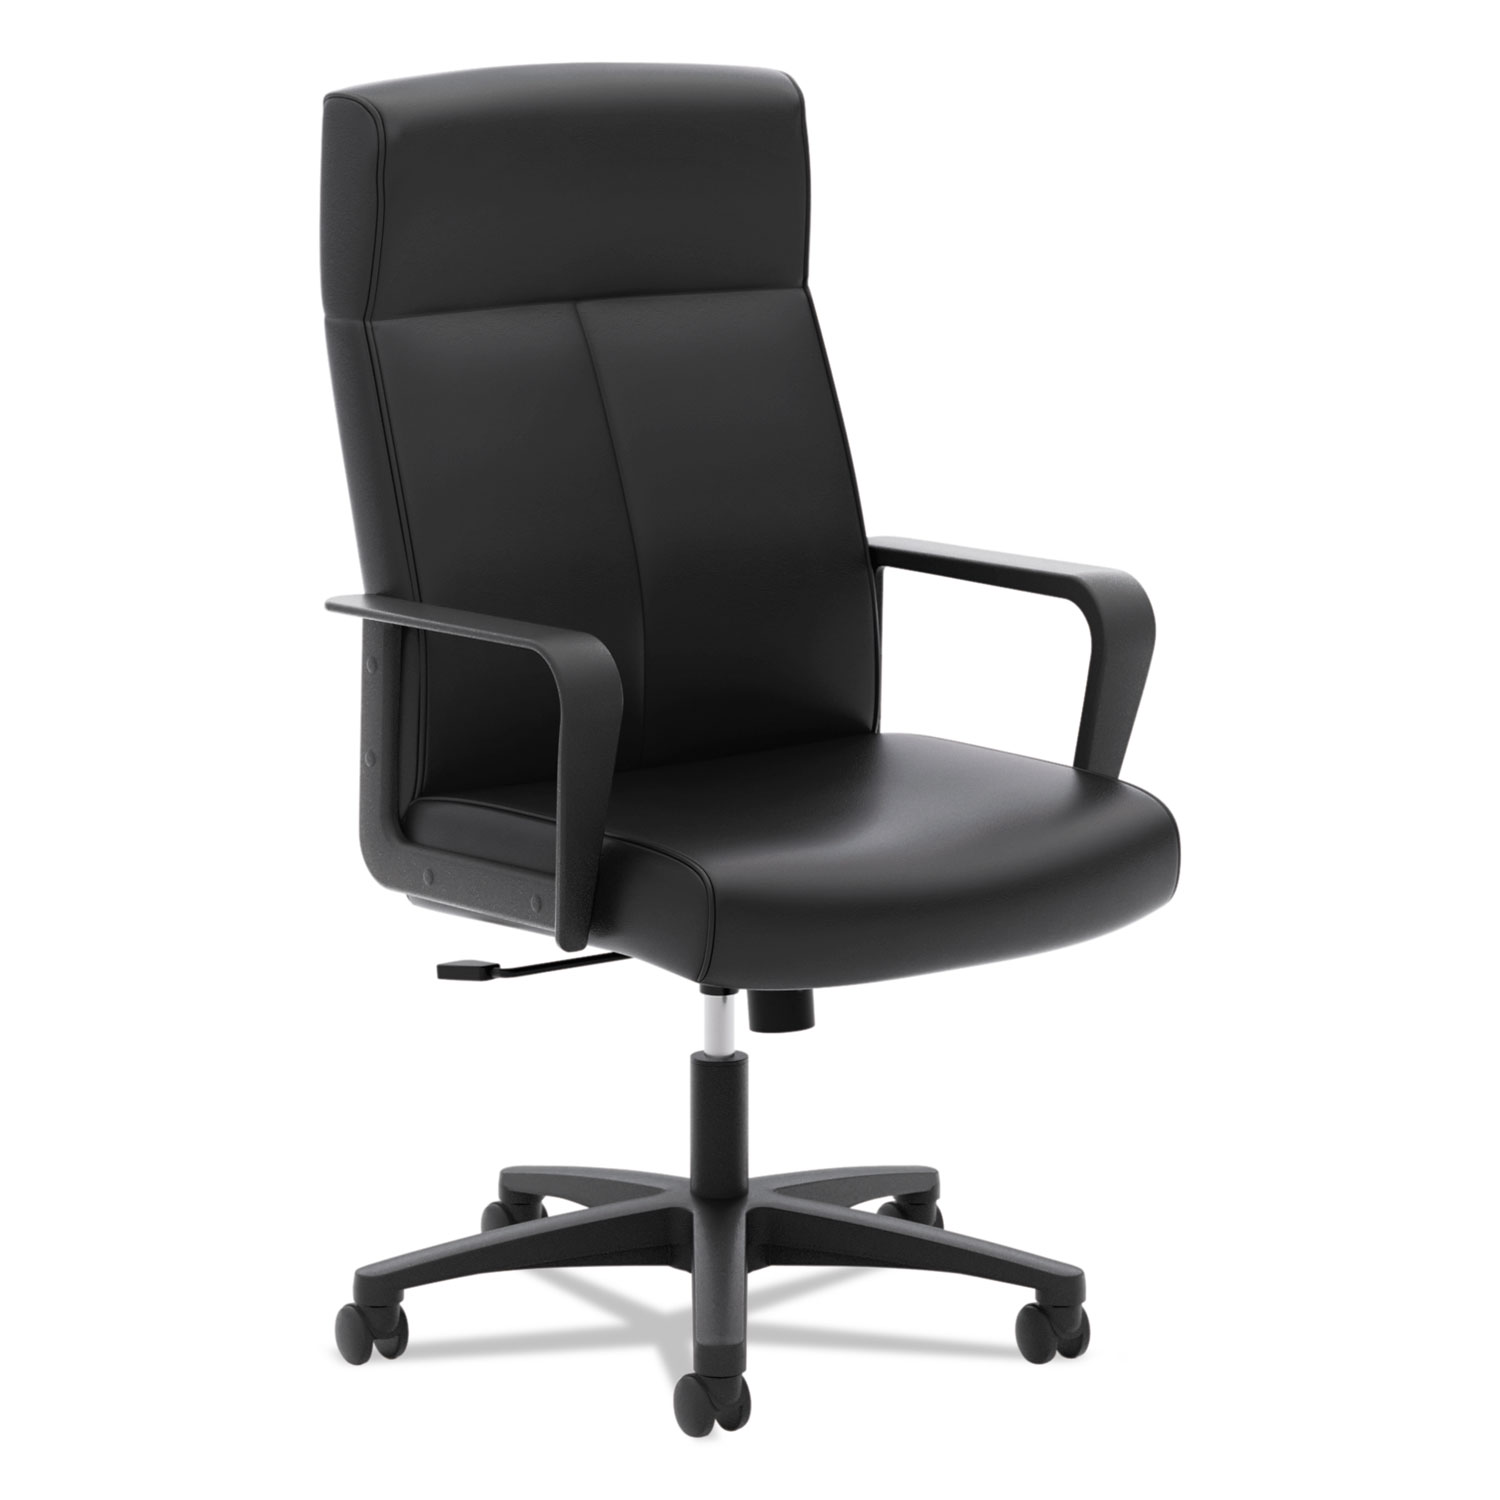 VL604 Series High-Back Executive Chair, Black SofThread Leather